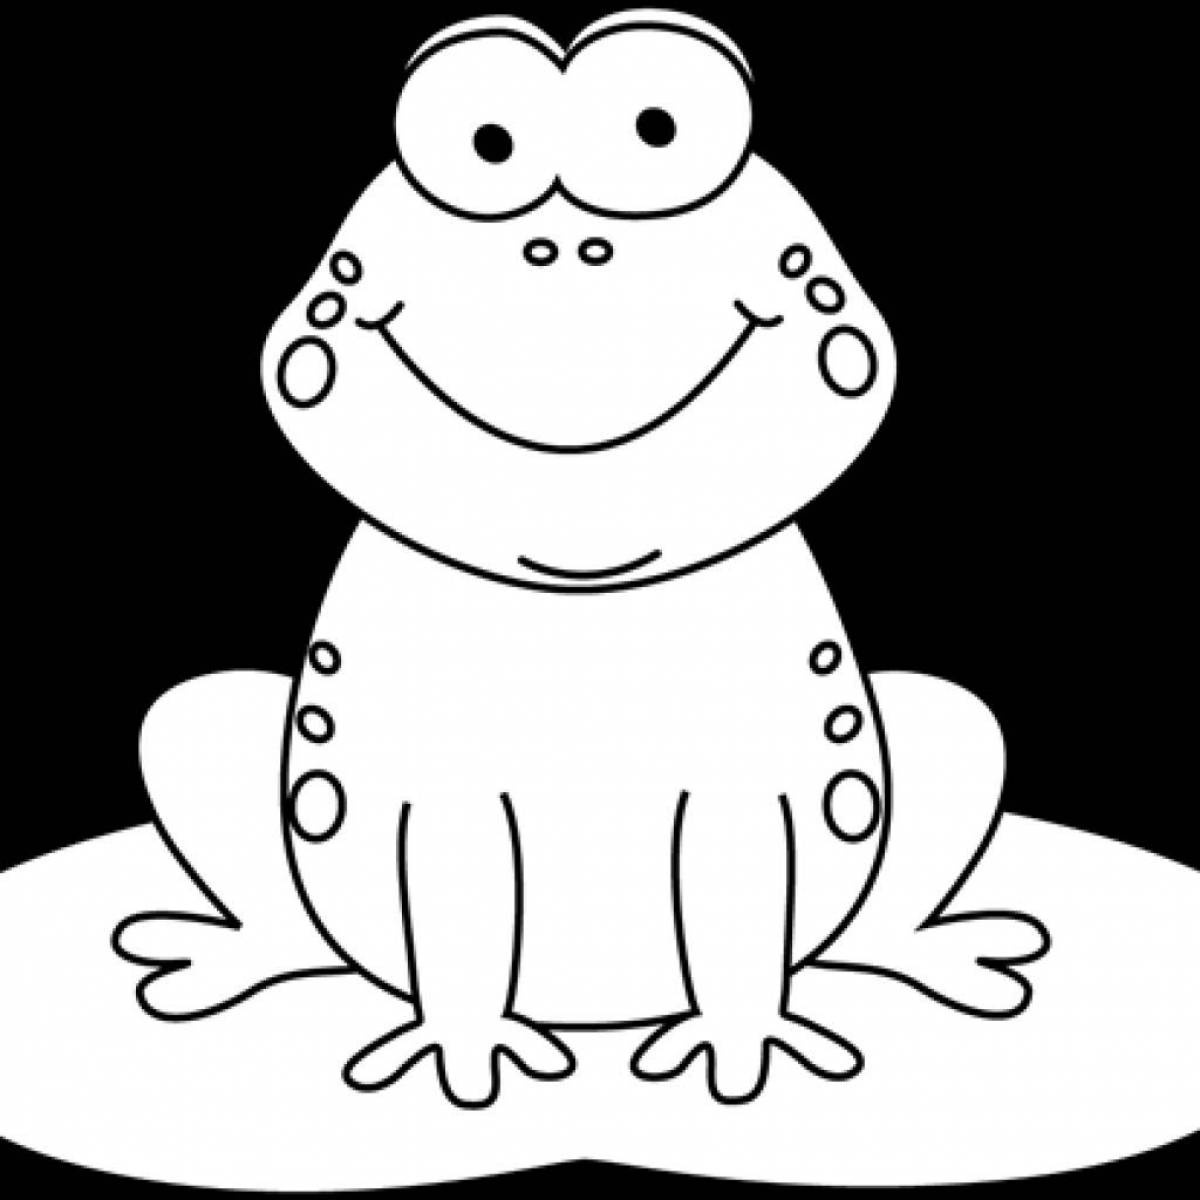 Frog for kids #1